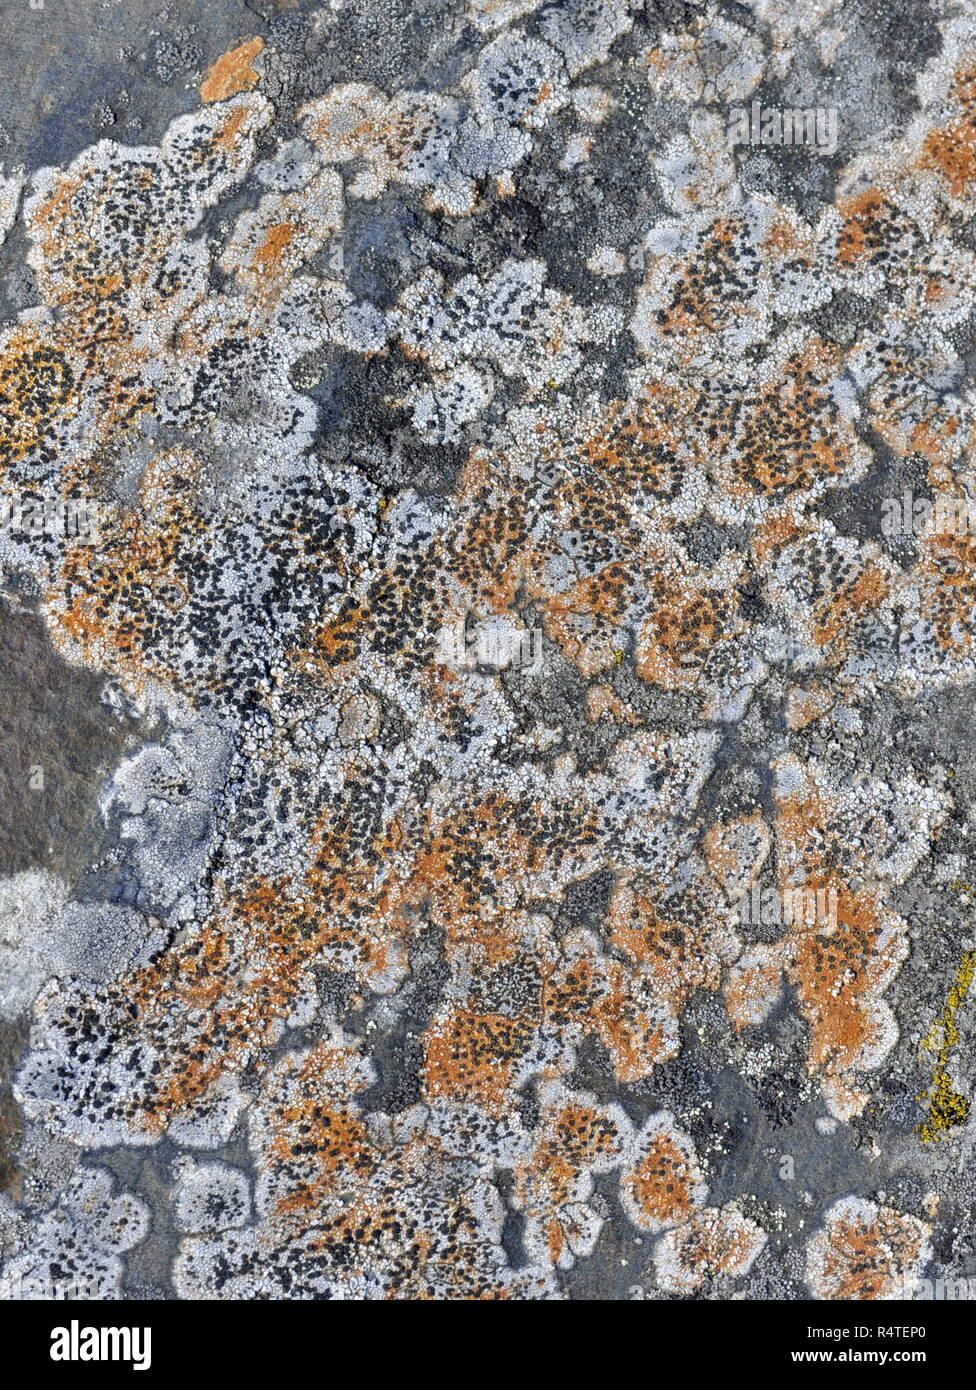 Porpidia lichen on a stone Stock Photo